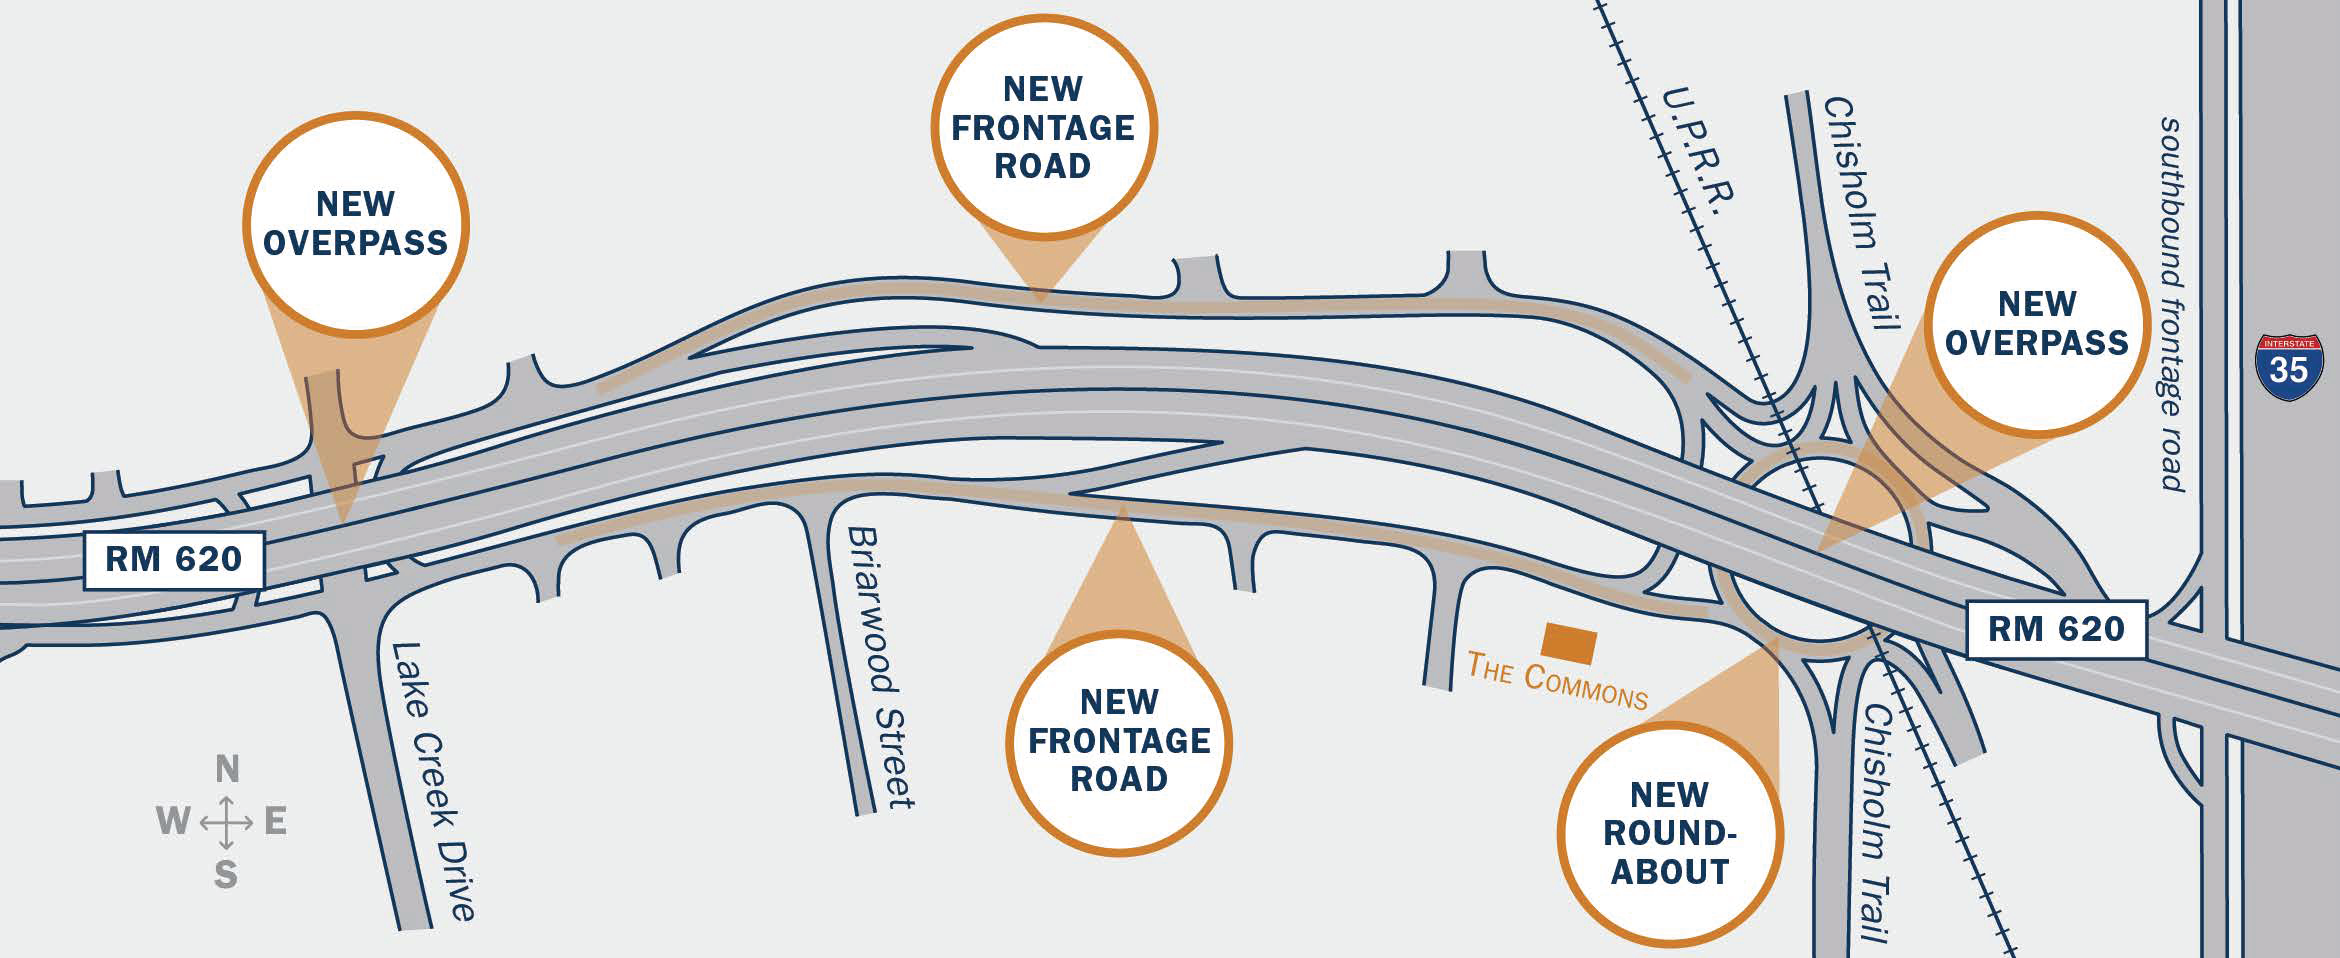 RM 620 Roundabout Project Improvements